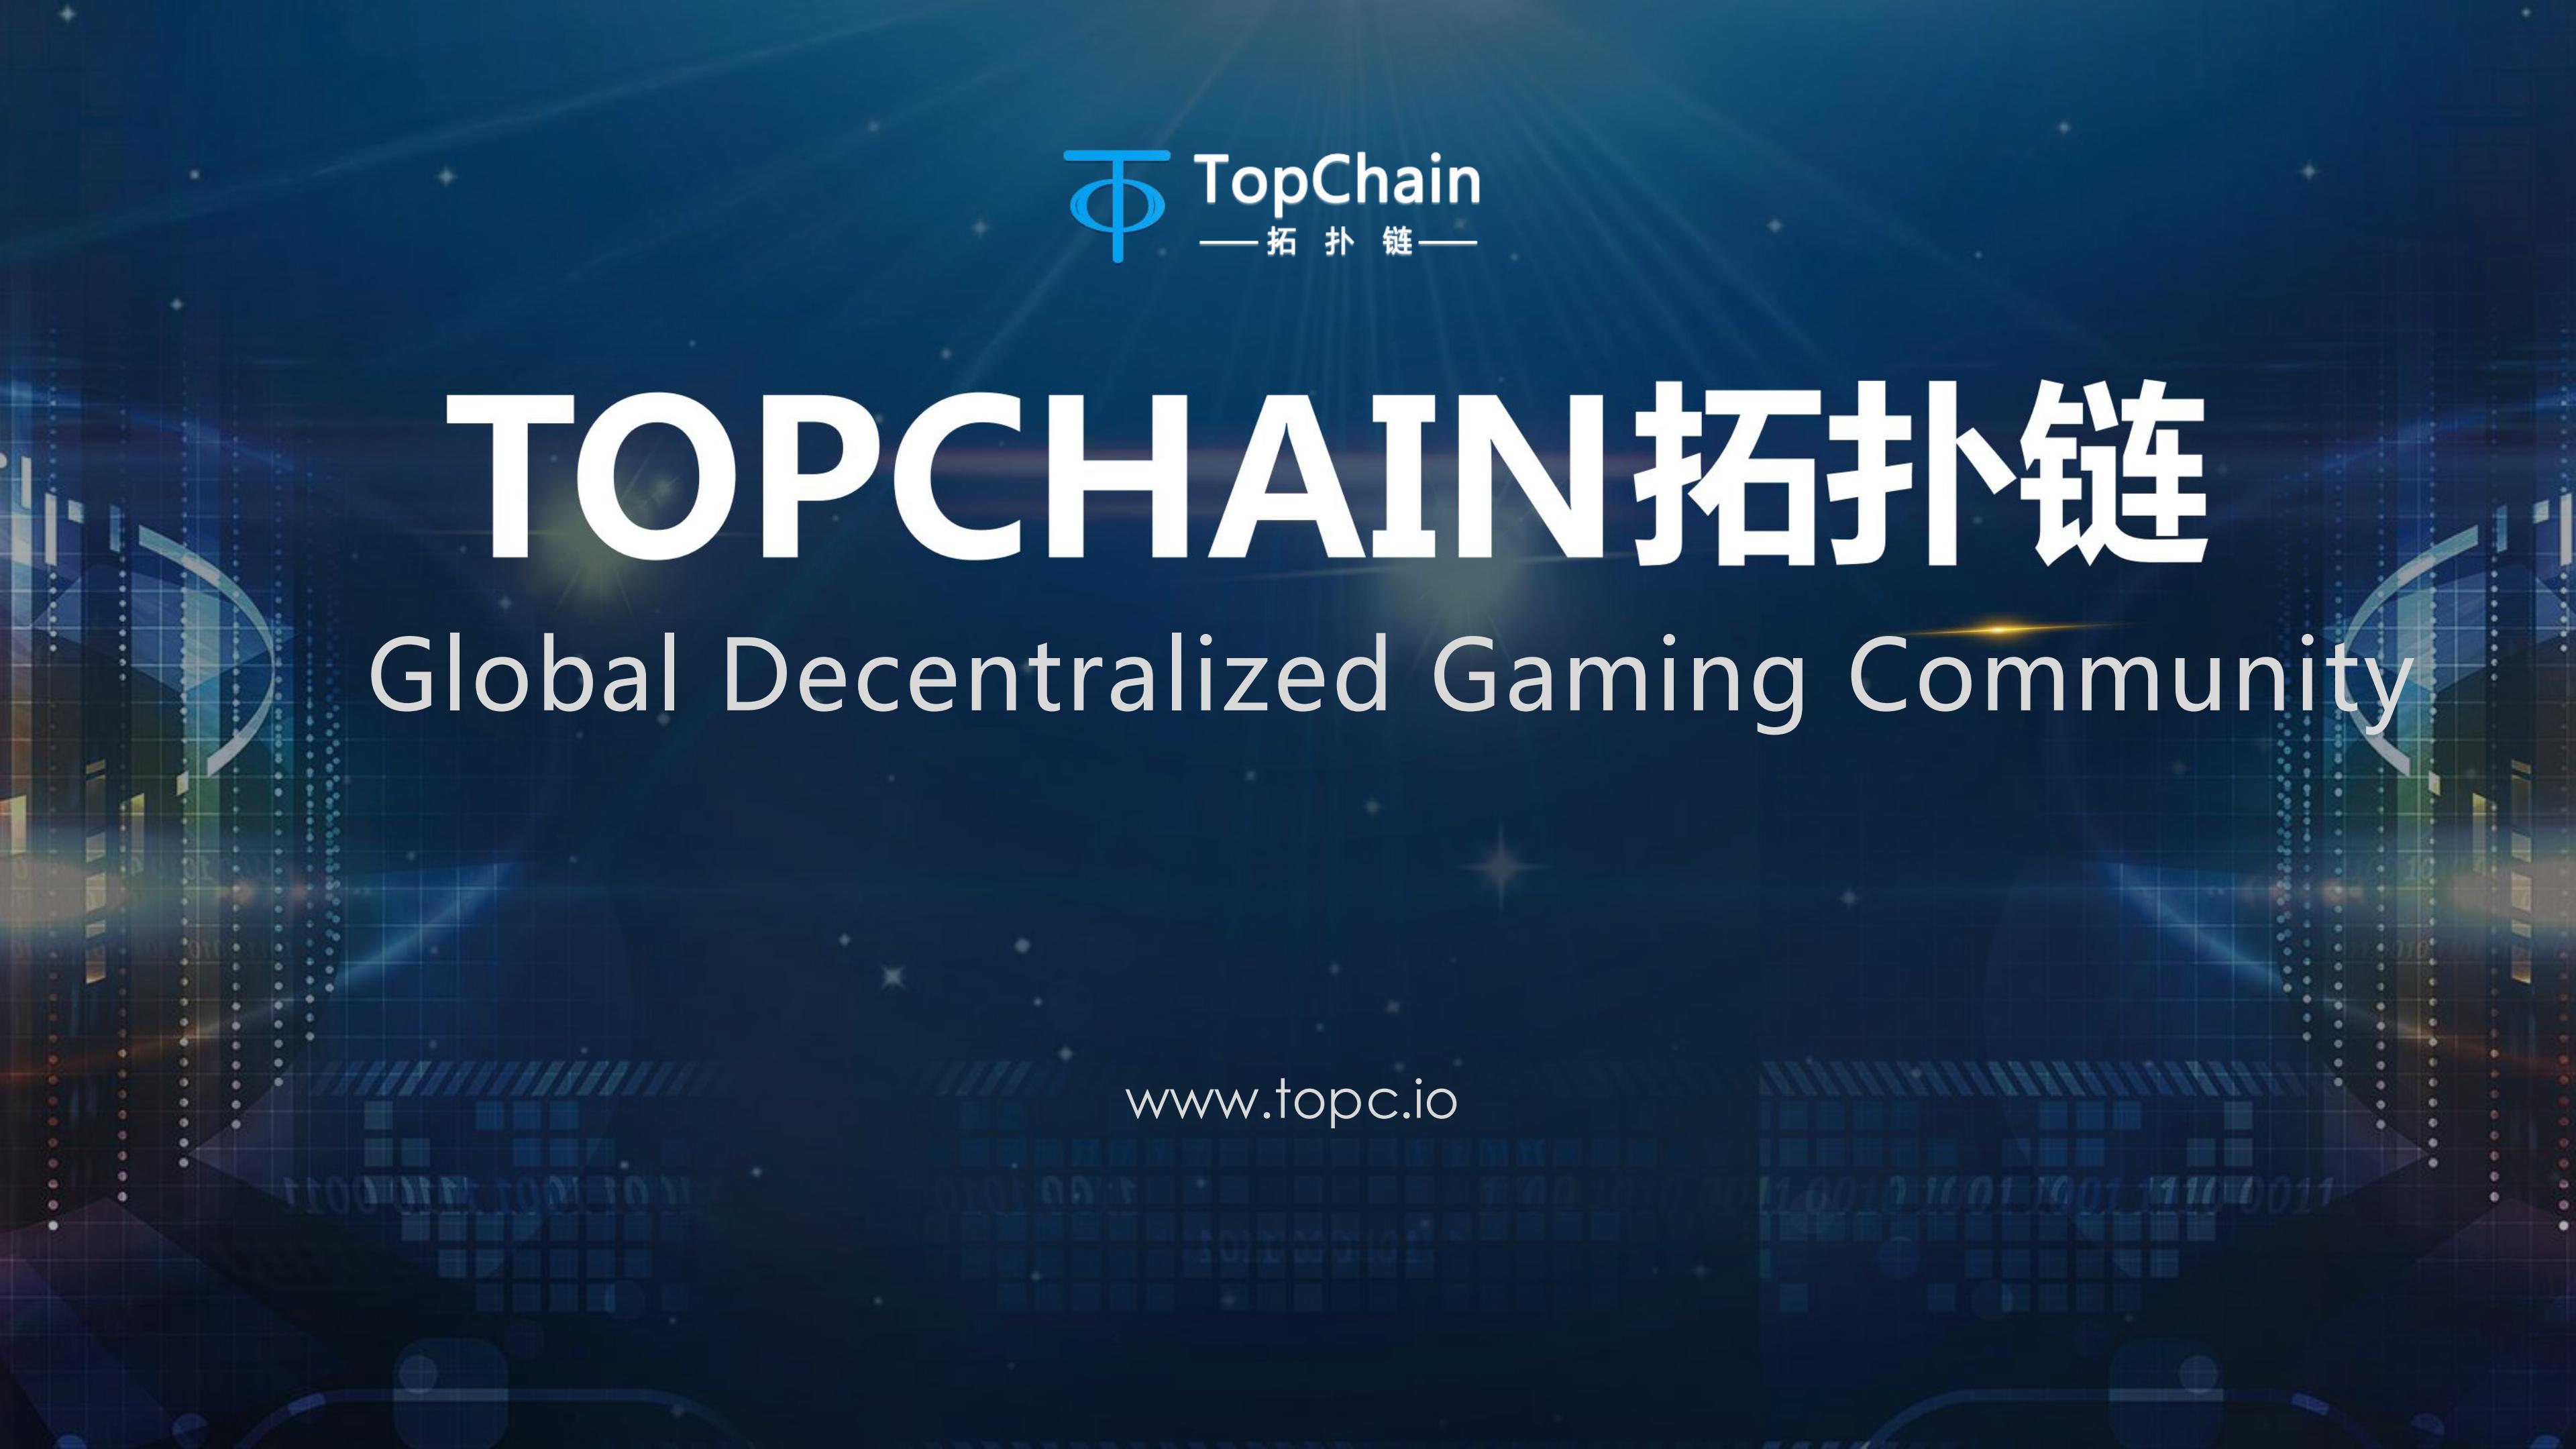 TOPC_topchain-en_00.jpg